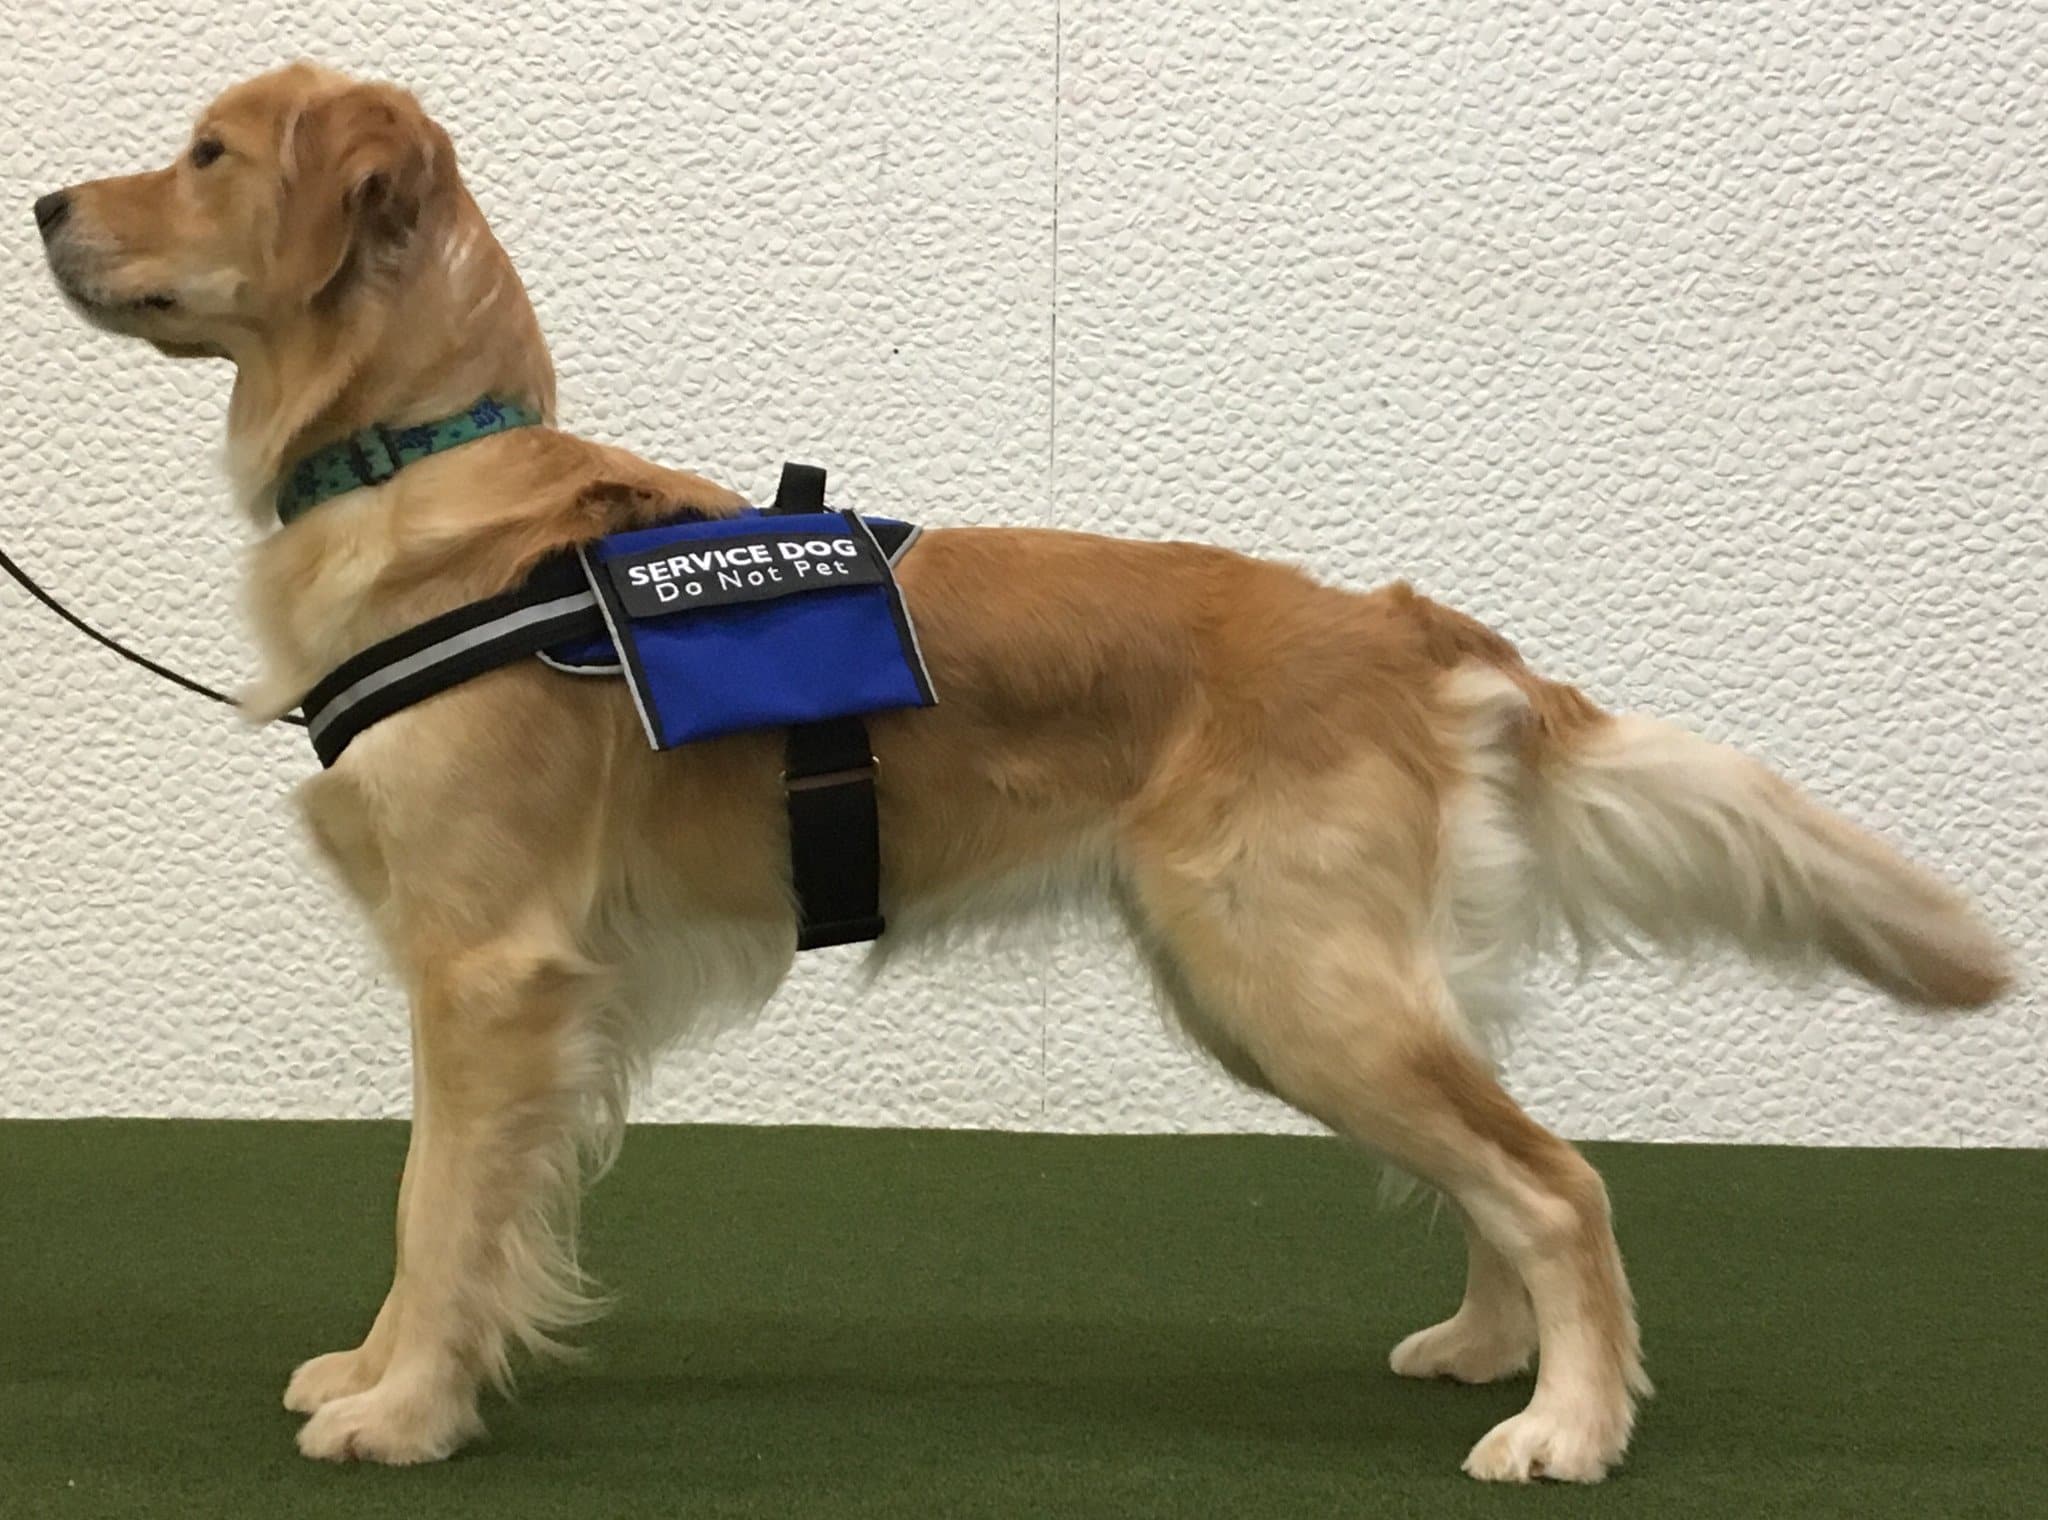 Extra-Large Service Dog Vest on a working dog